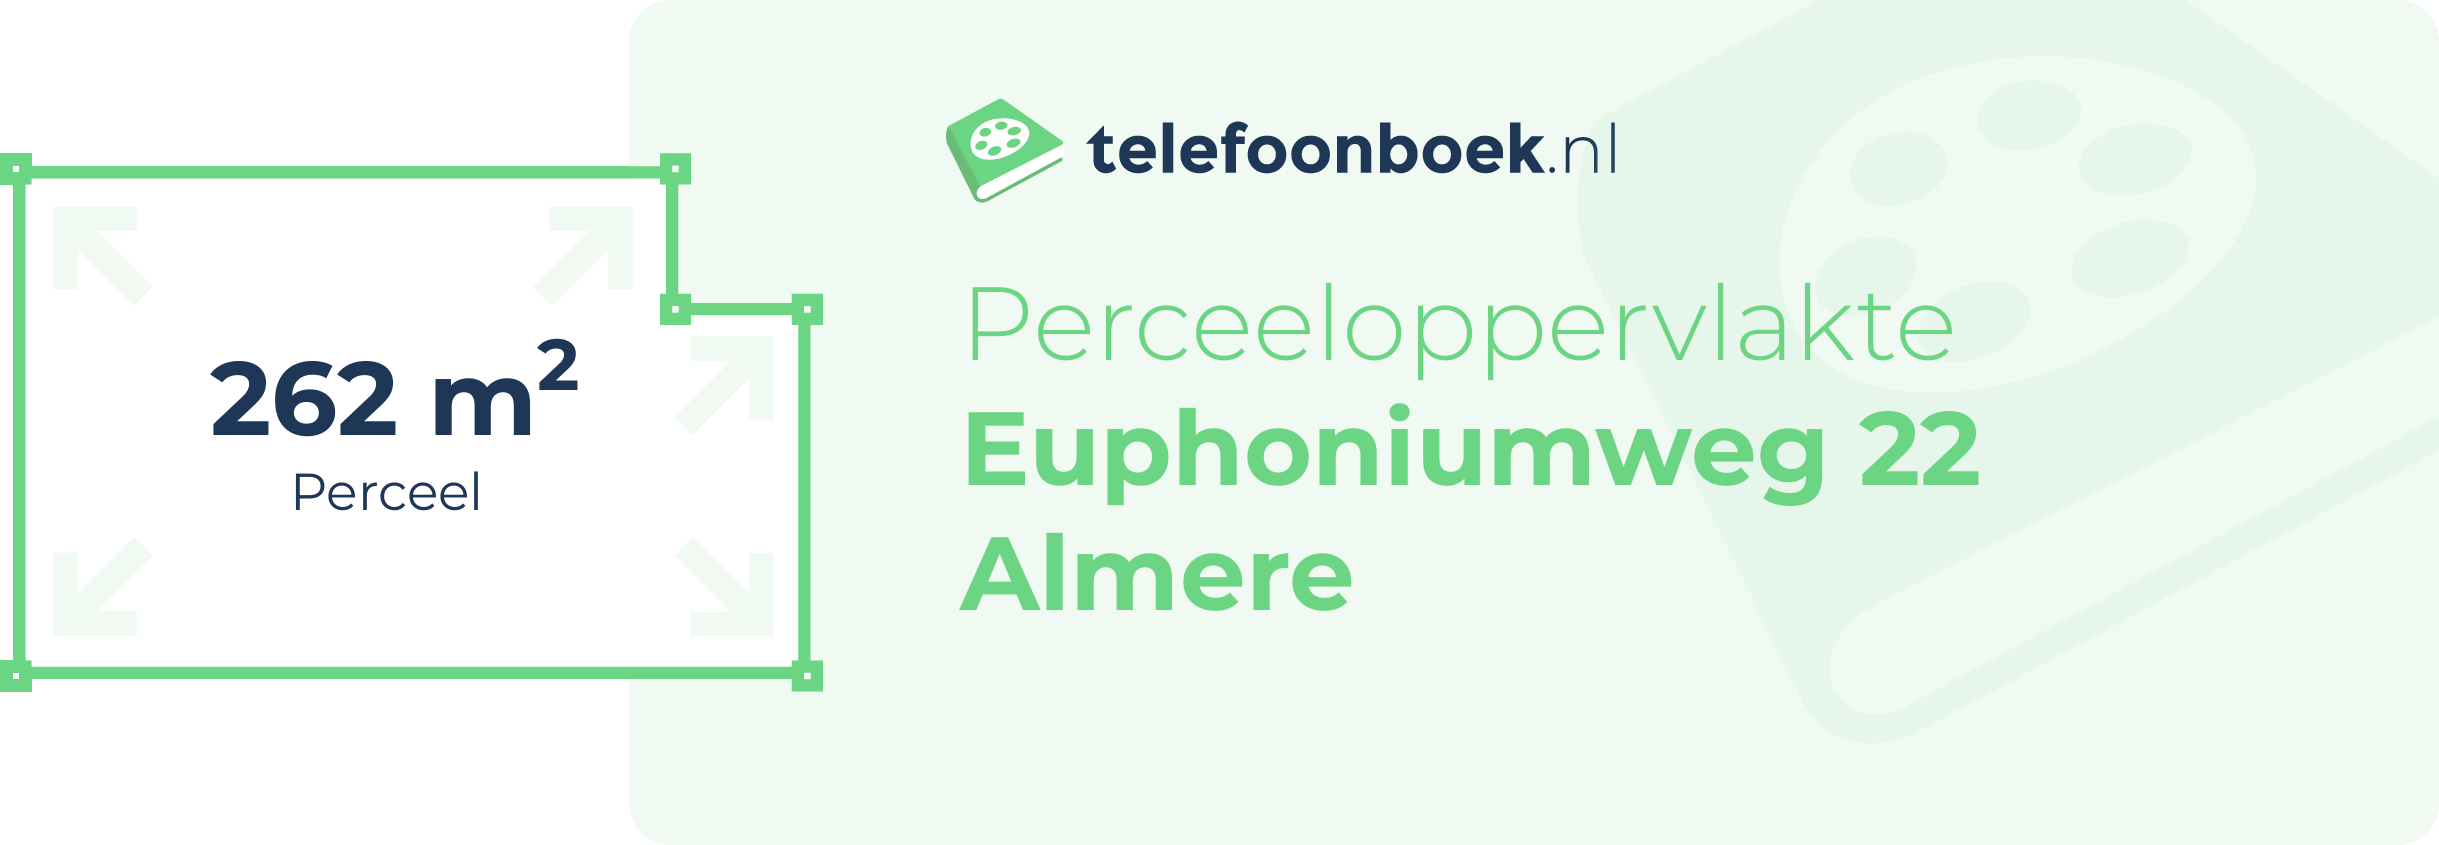 Perceeloppervlakte Euphoniumweg 22 Almere